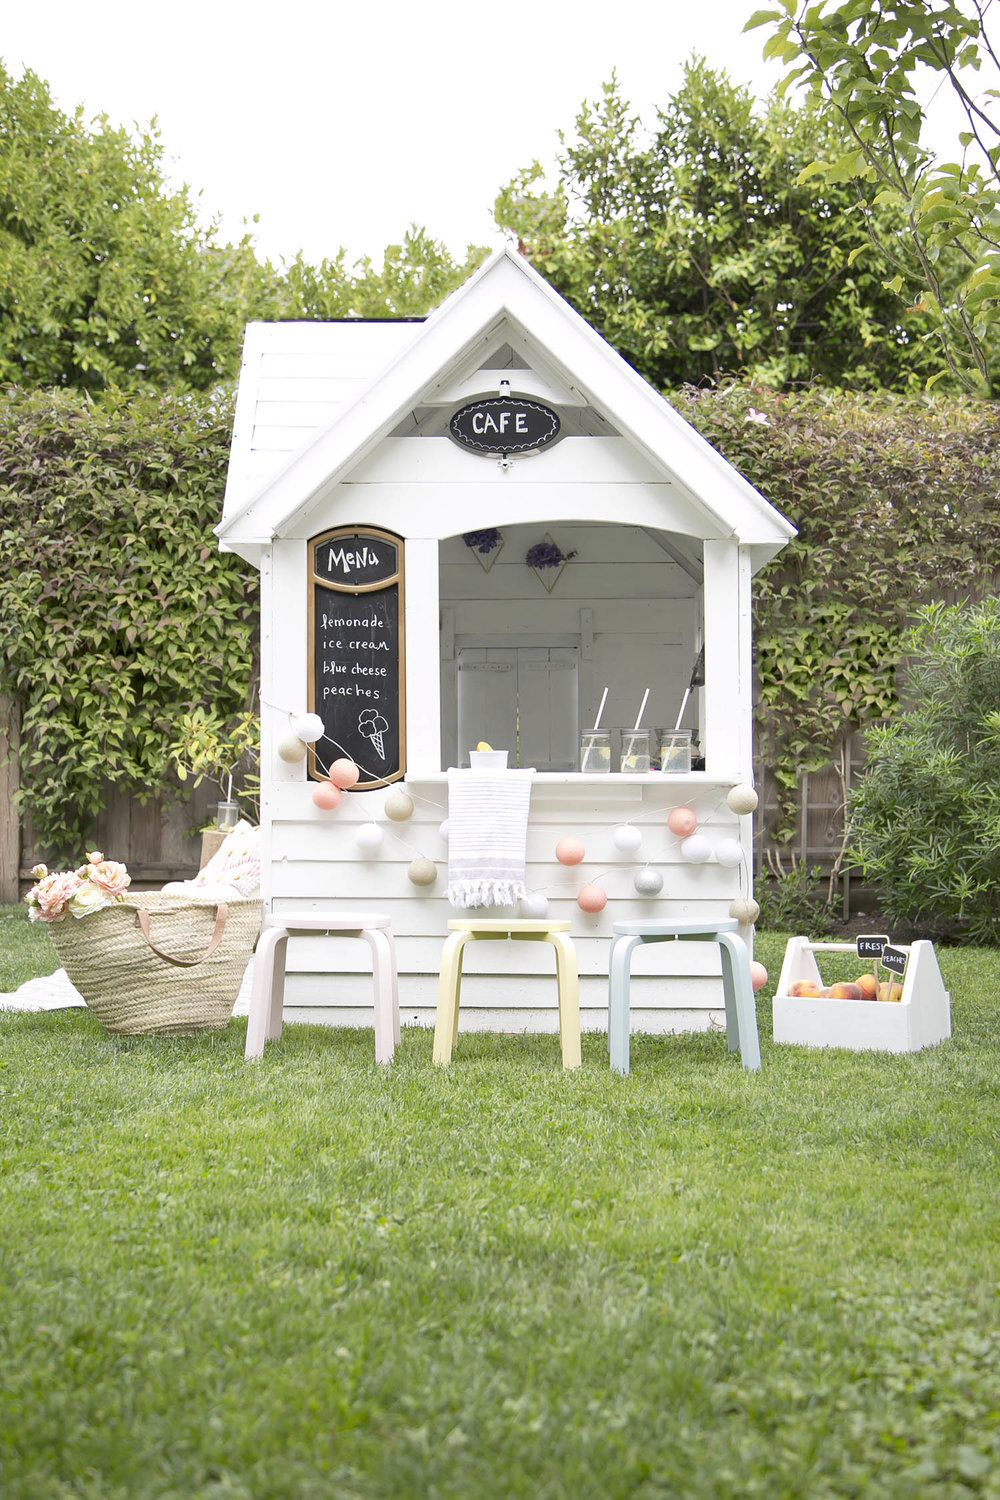 Summer garden idea with a DIY playhouse for the kids